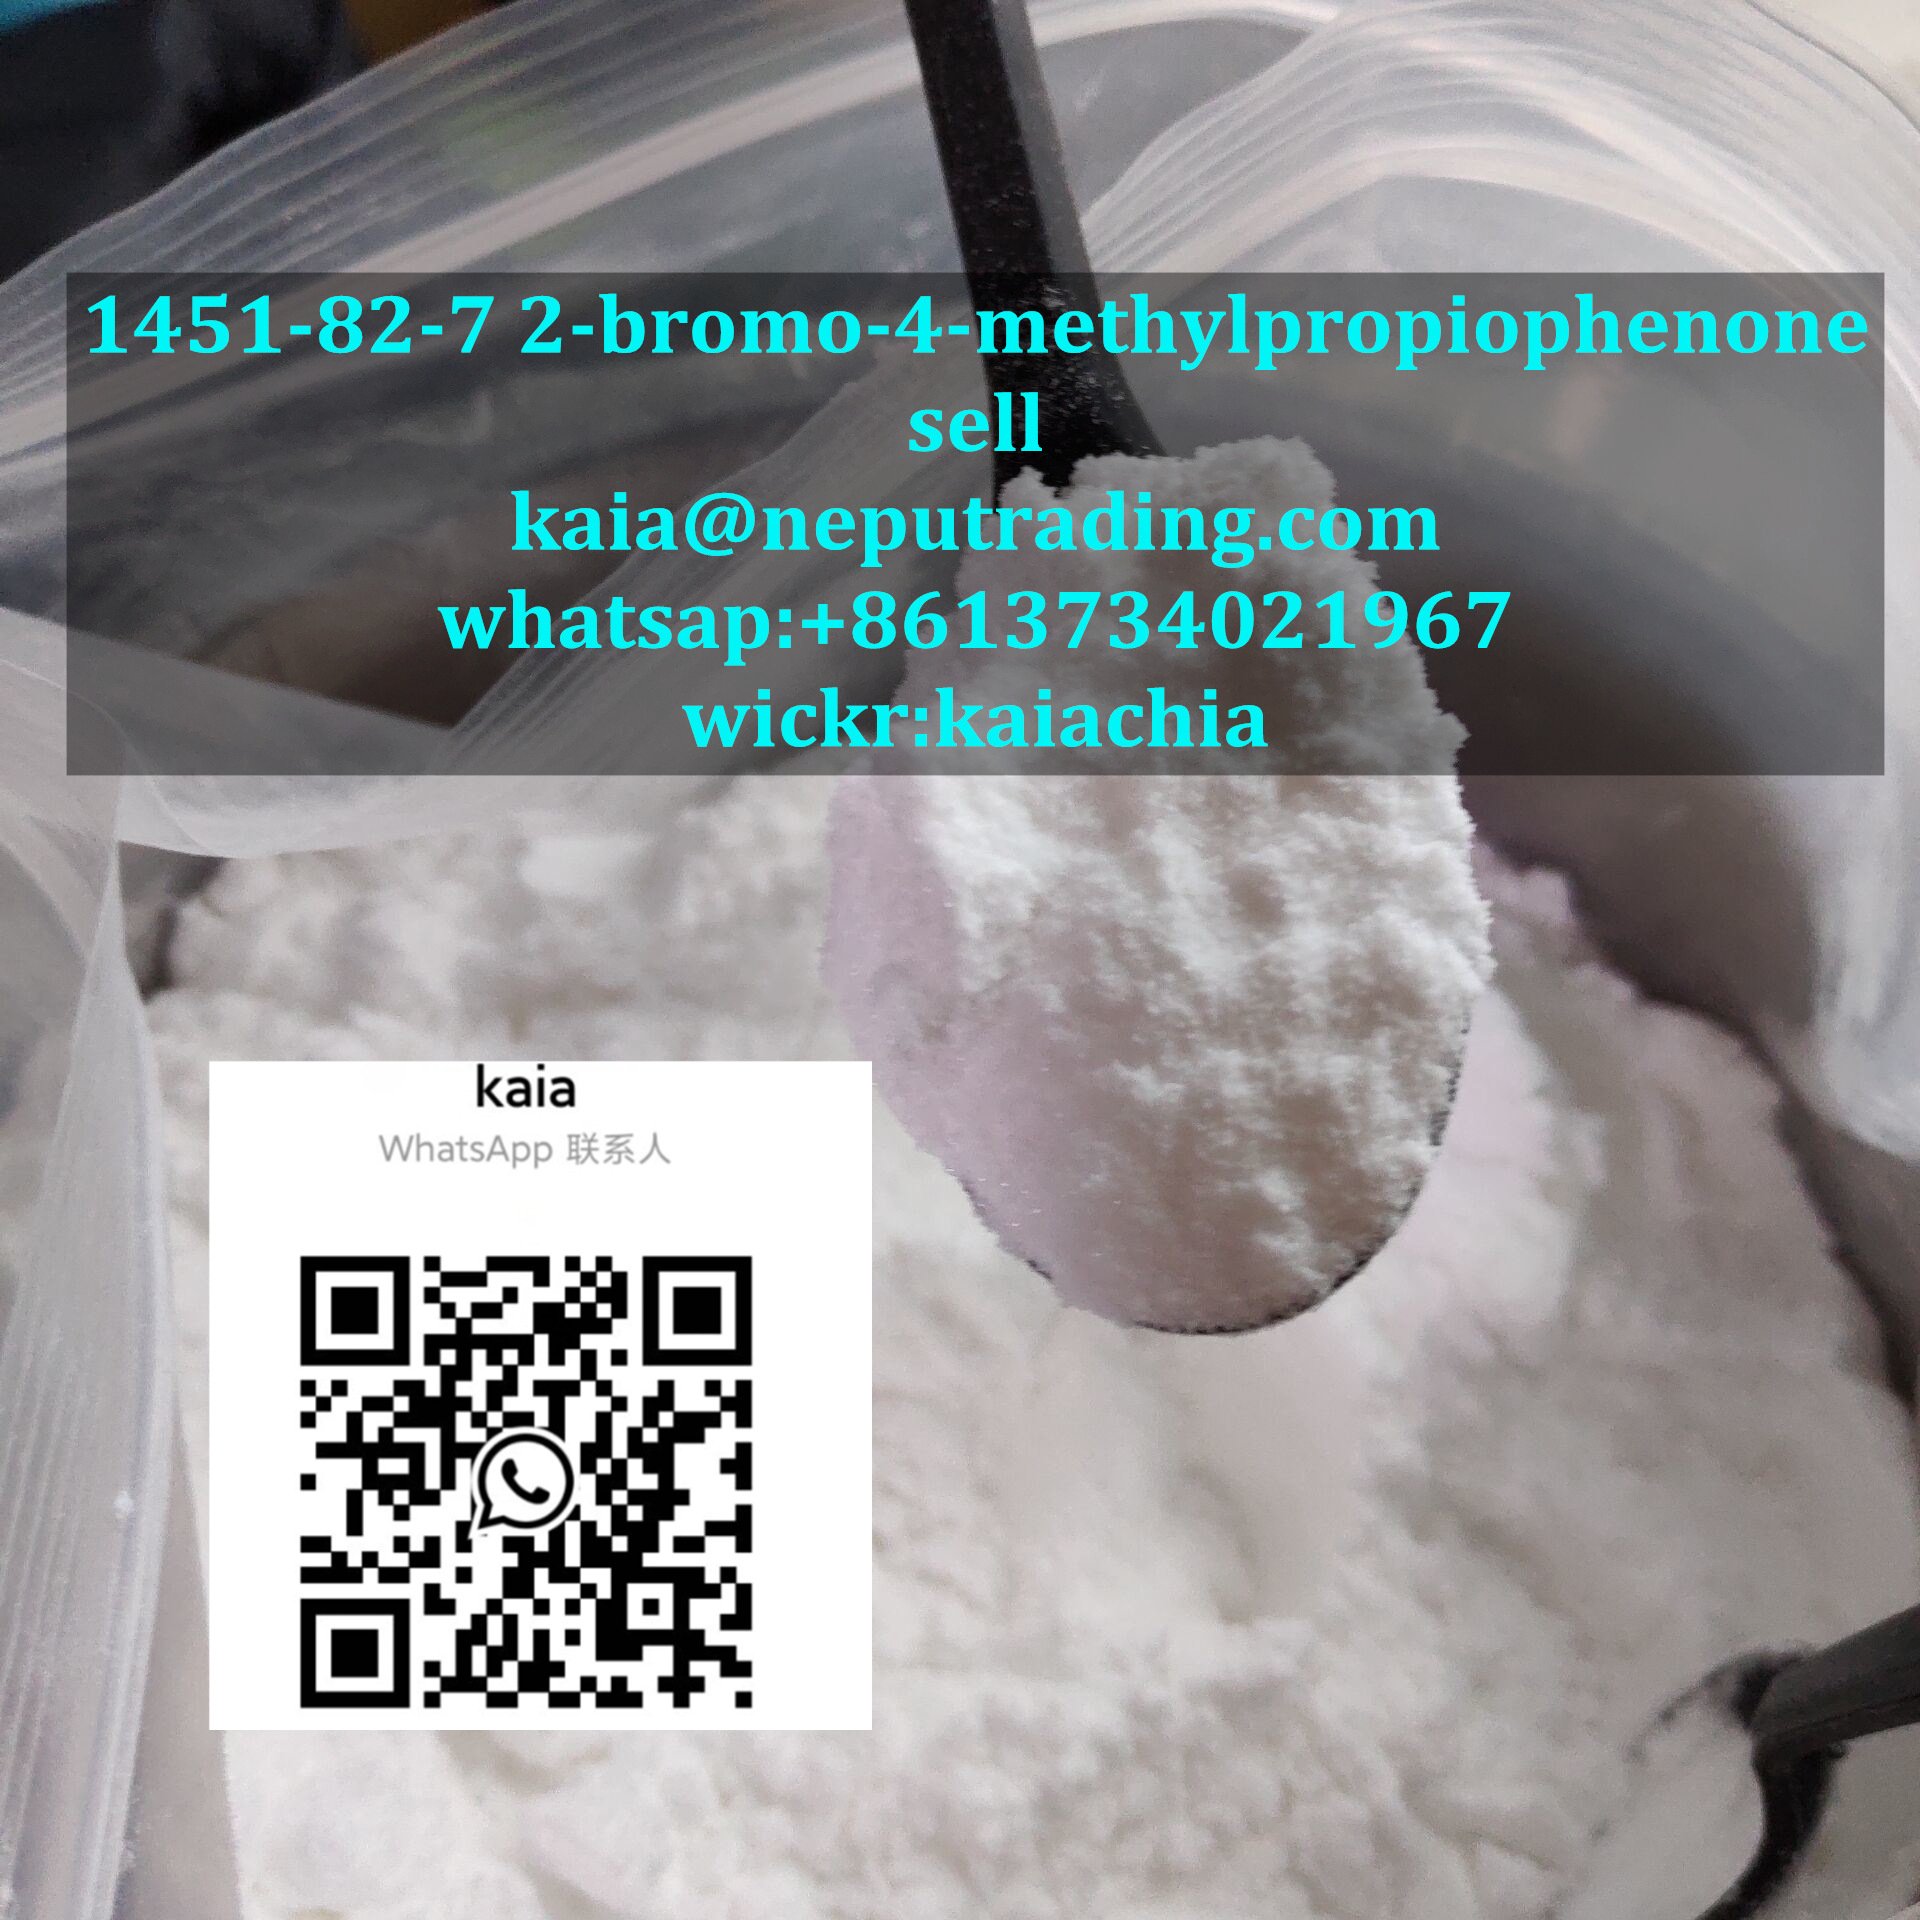 Factory supply 1451-82-7 2-bromo-4-methylpropiophenone fast shipping